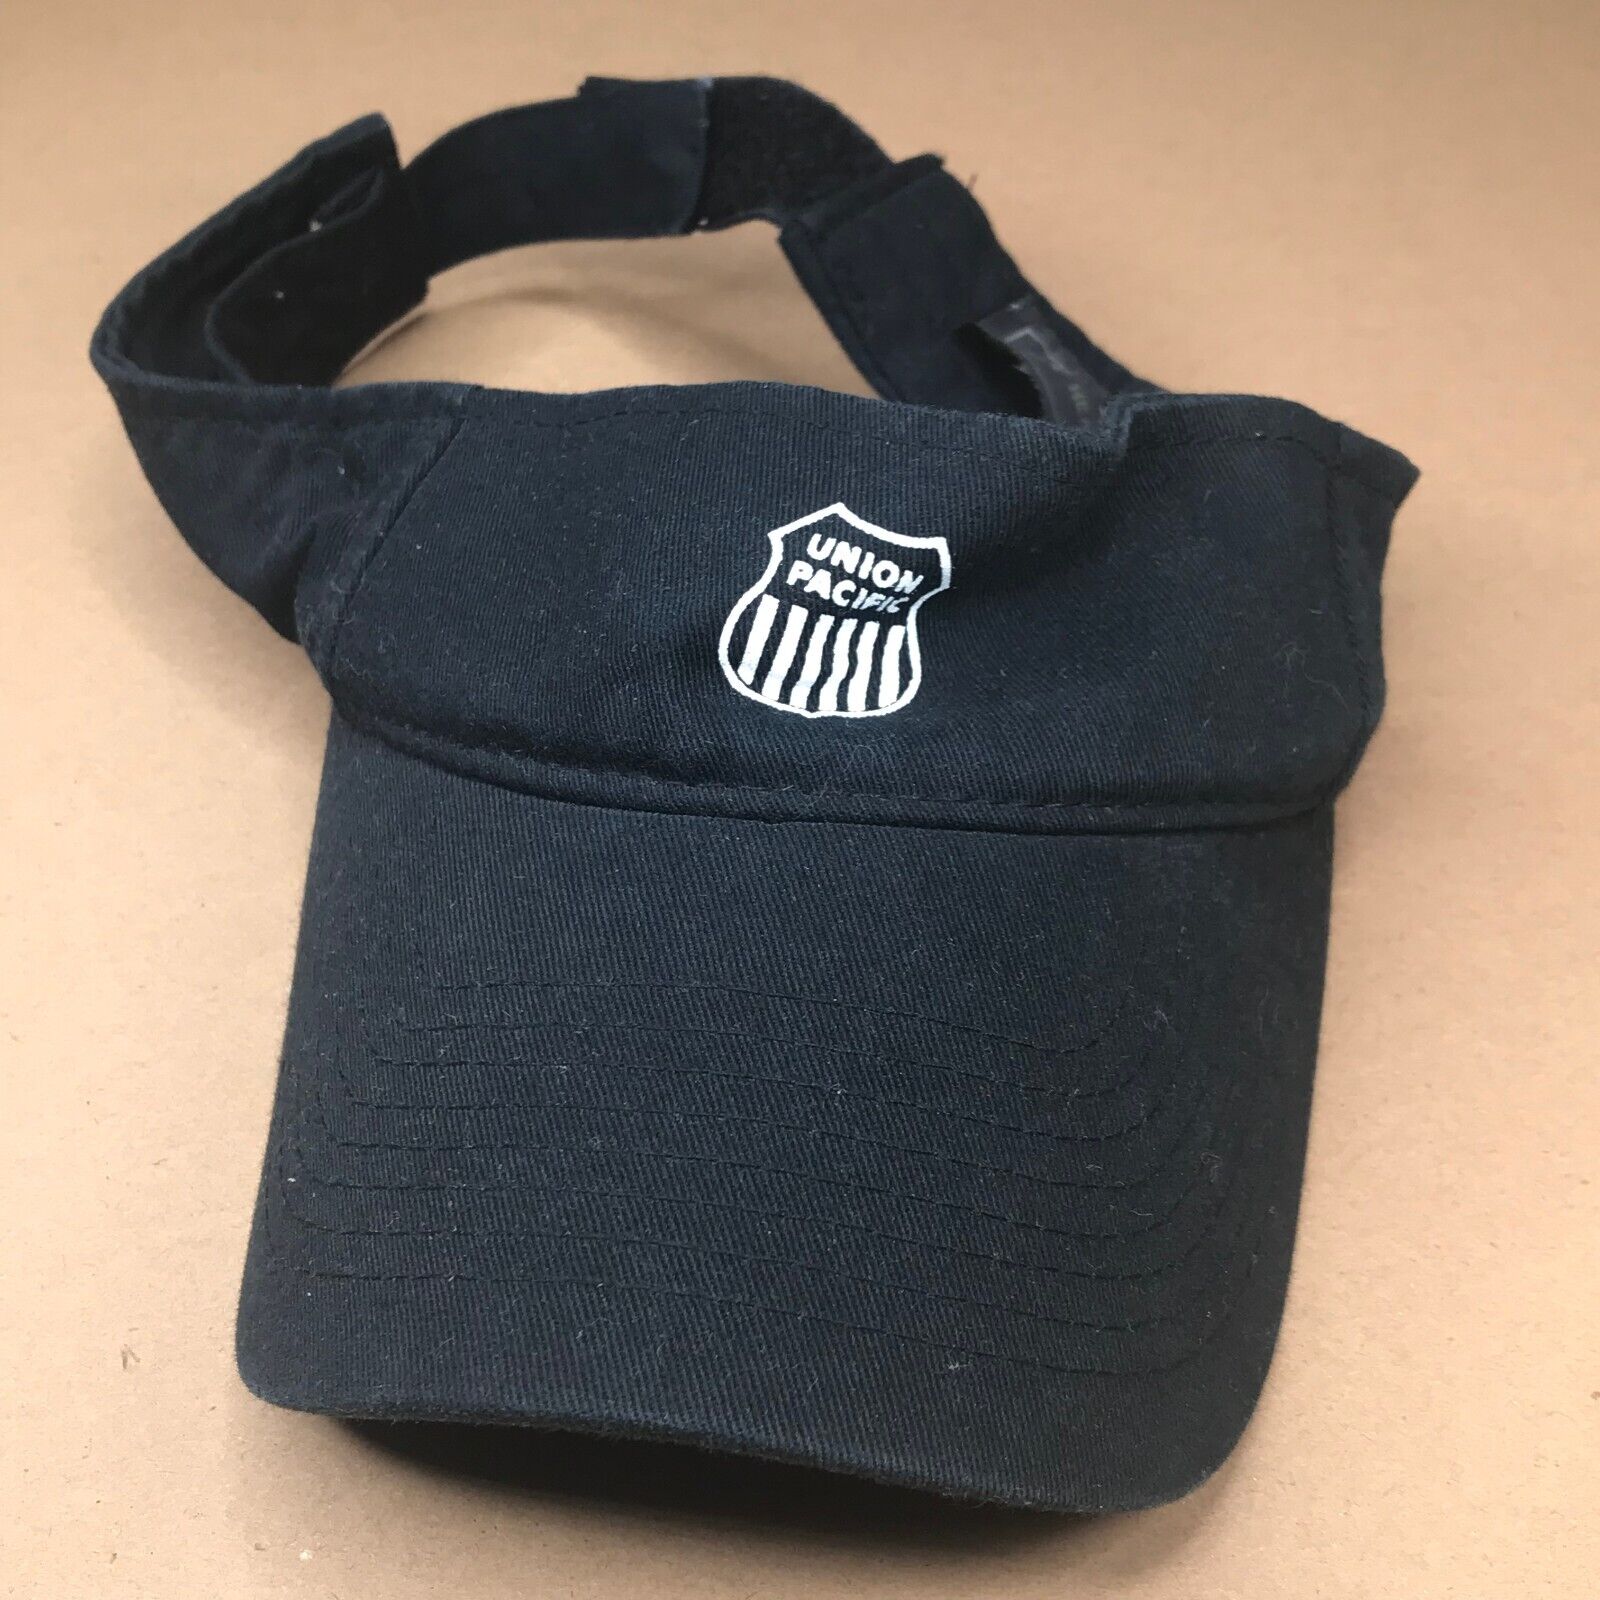 Union Pacific Shield Emblem Small Logo Sun Visor Hat Cap Black ATT Headwear